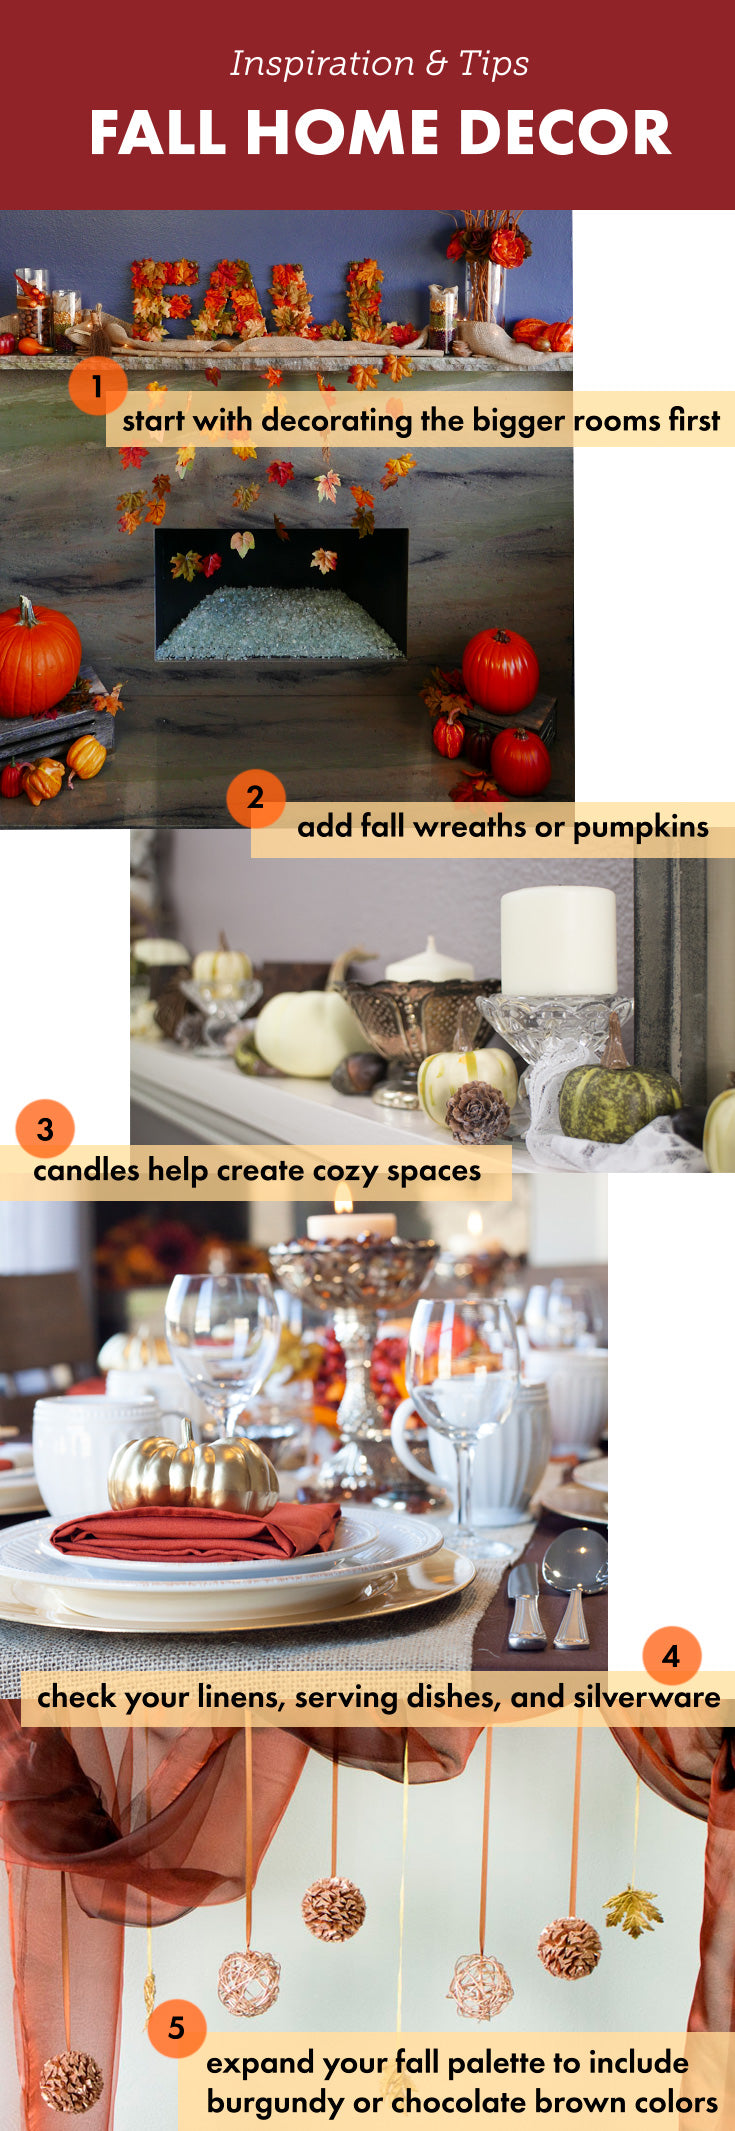 Tips for Fall Home Decor | BalsaCircle.com